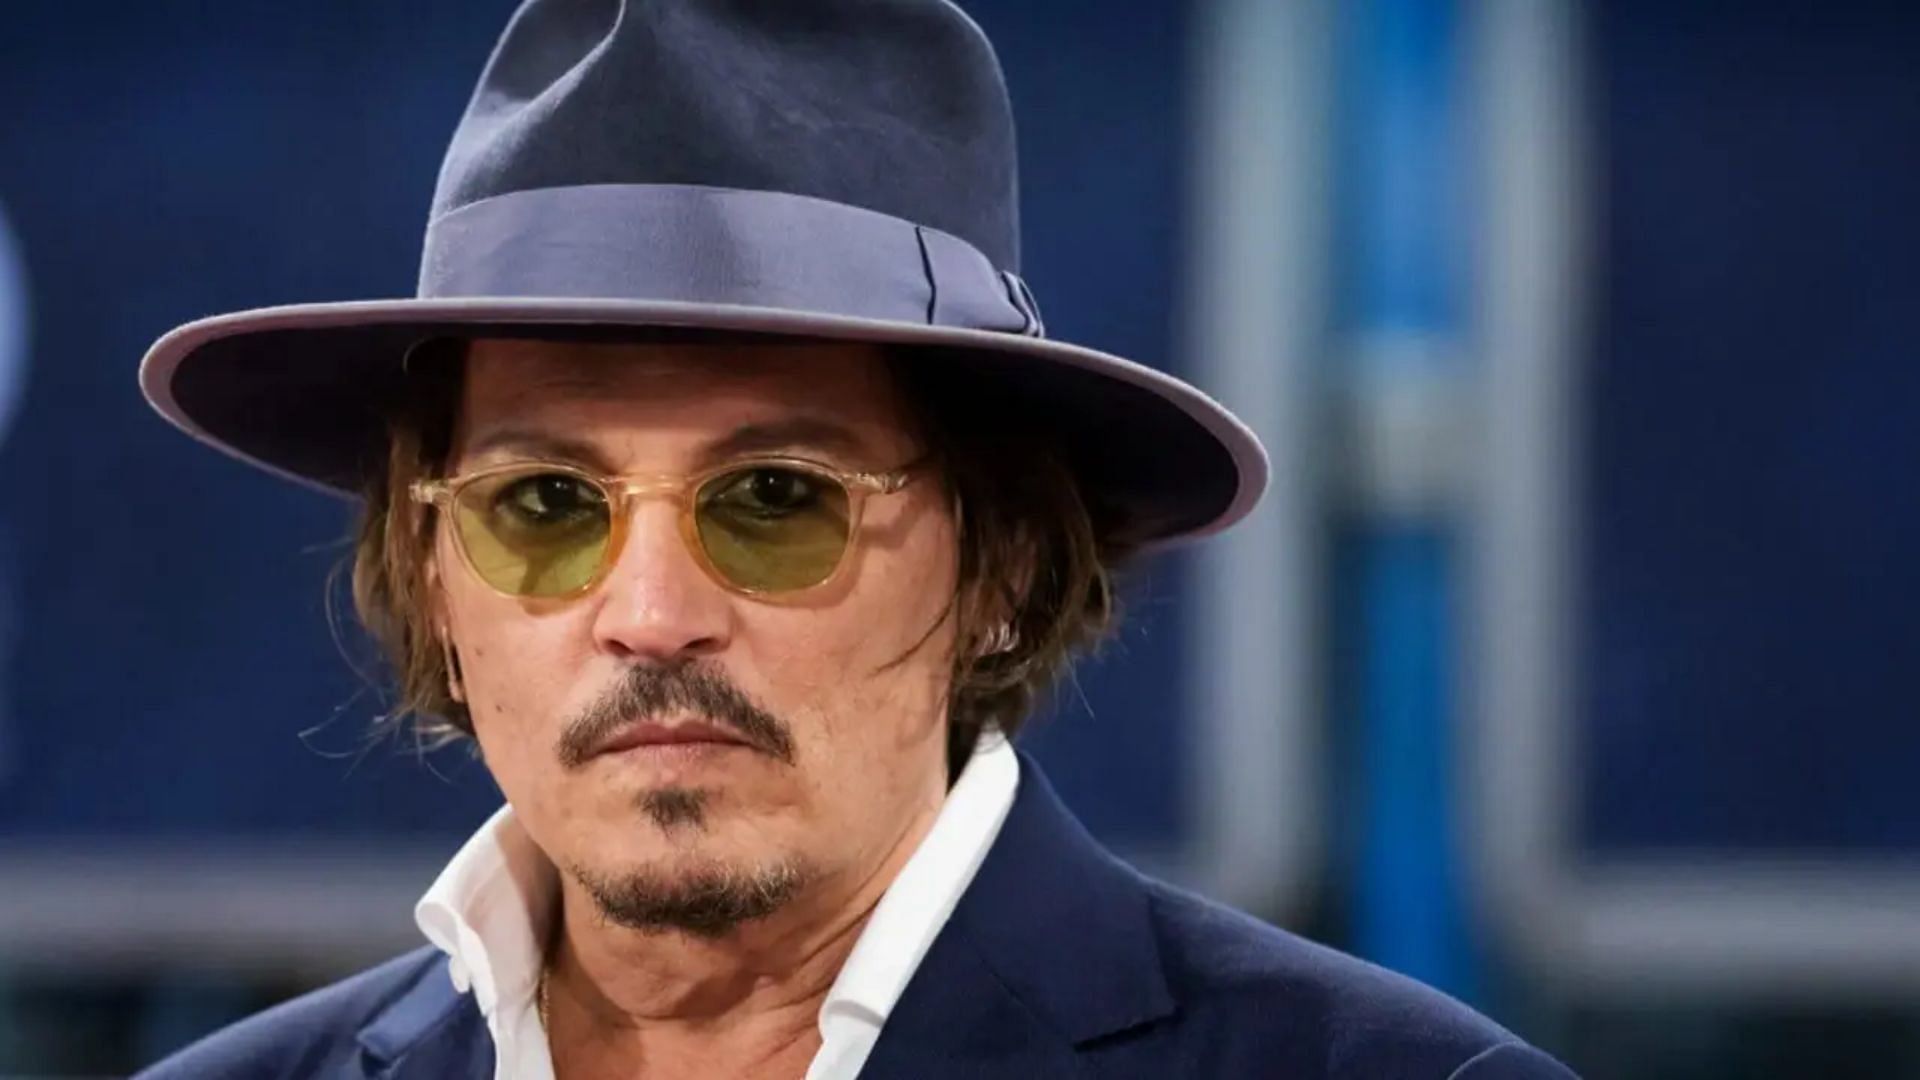 Johnny Depp ( Image via Nurphoto/Getty Images)